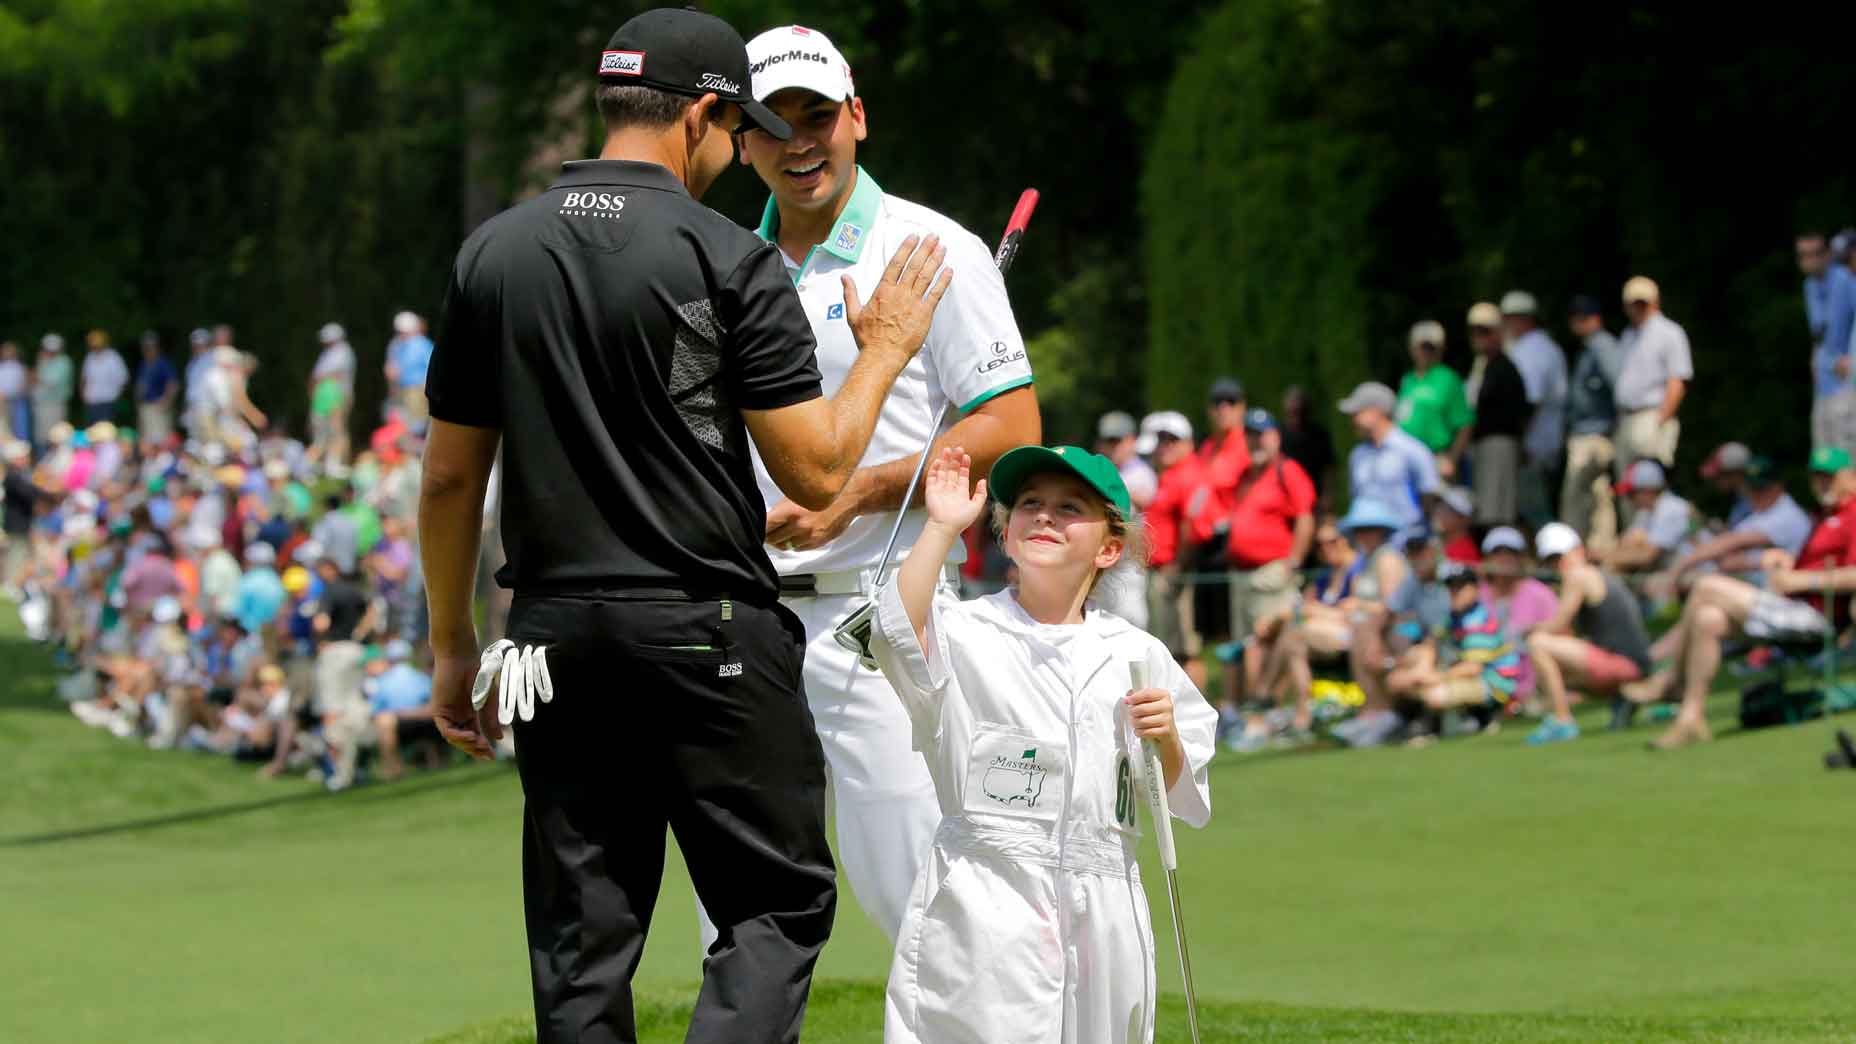 Pro golfer high-fives child at Masters Par-3 Contest